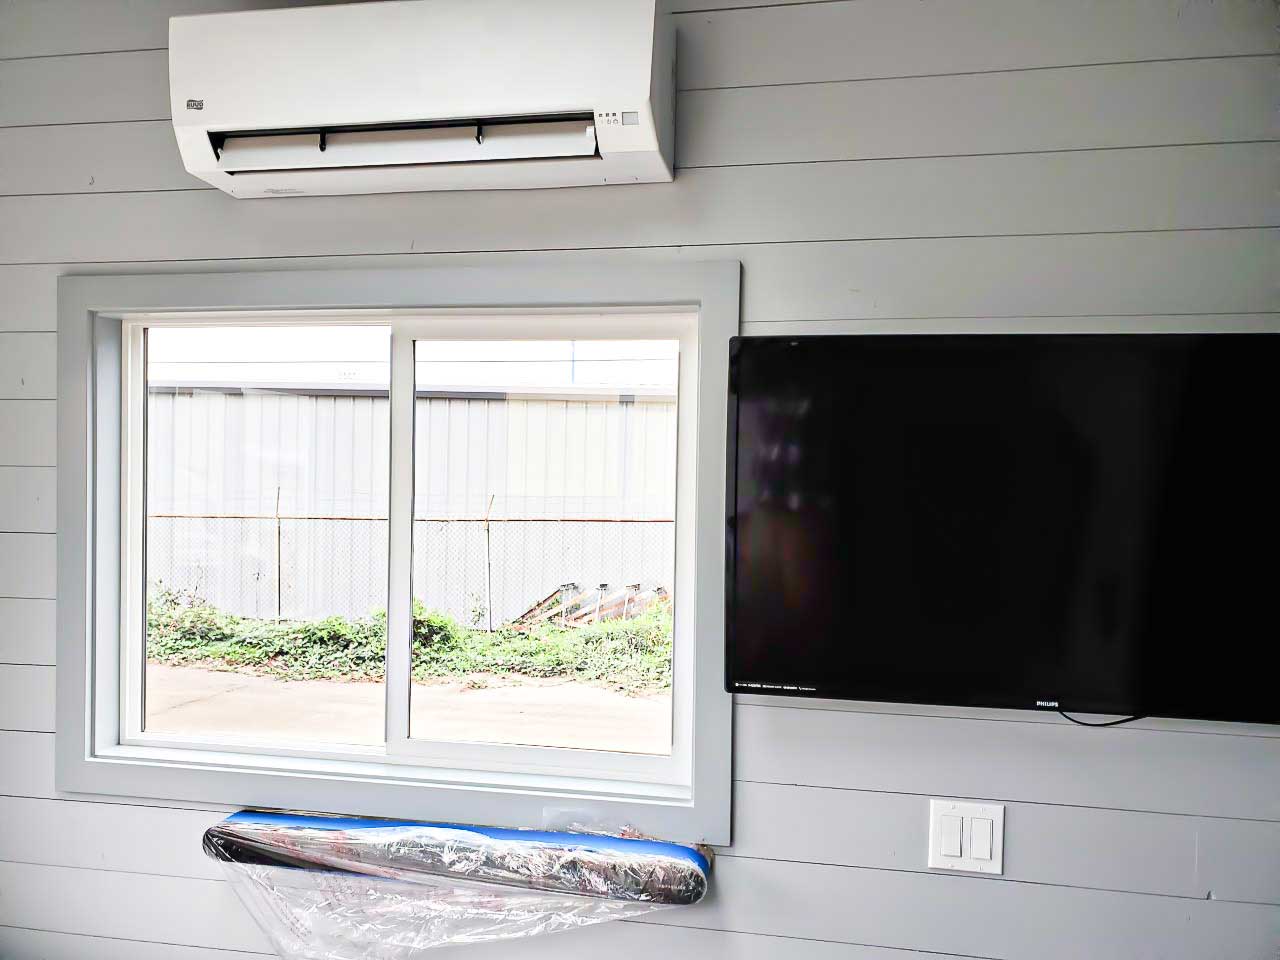 WIndown, TV and heat pump in the True Blue custom tiny home